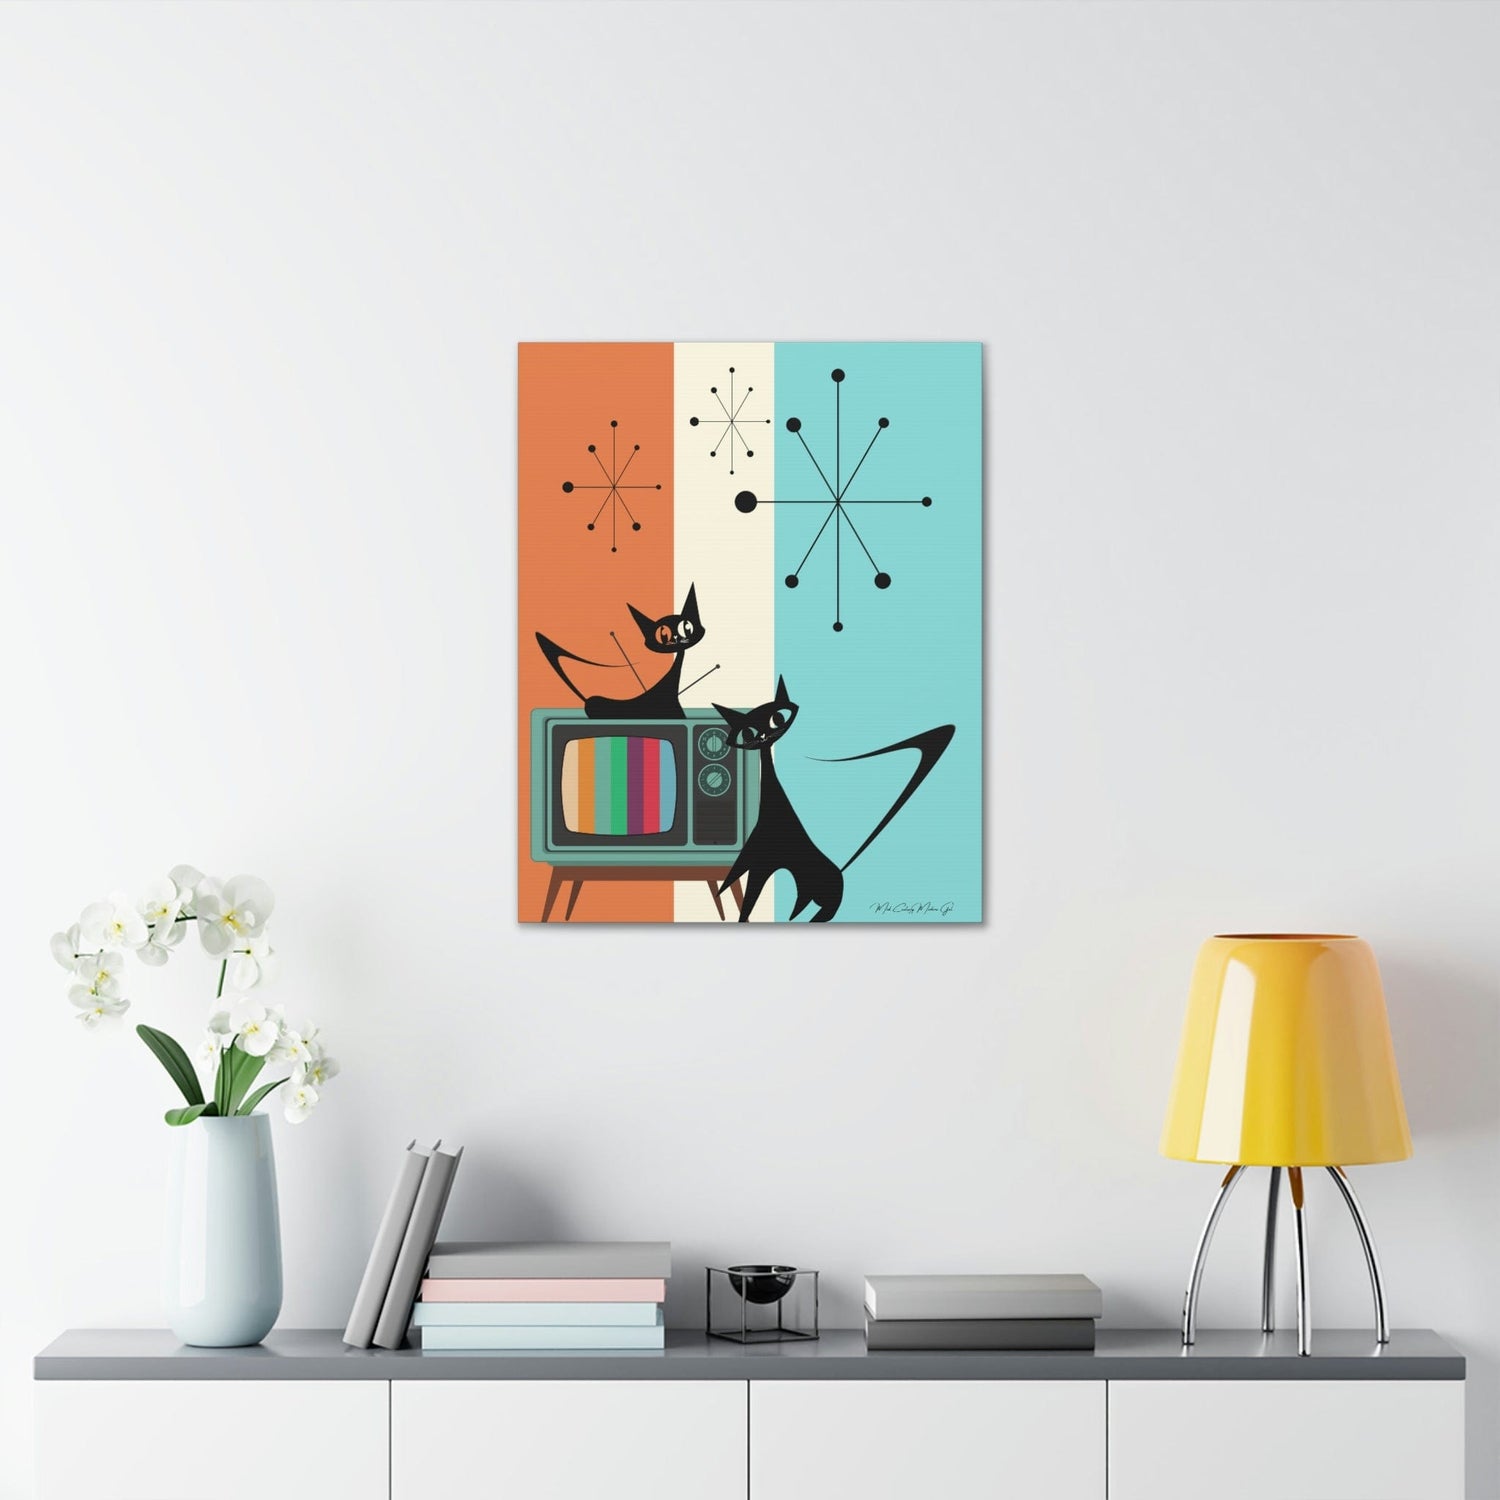 Atomic Cat Retro Colored TV, Starburst, Mid Century Modern, Aqua, Orange, Cream Groovy Canvas Wall Art Canvas